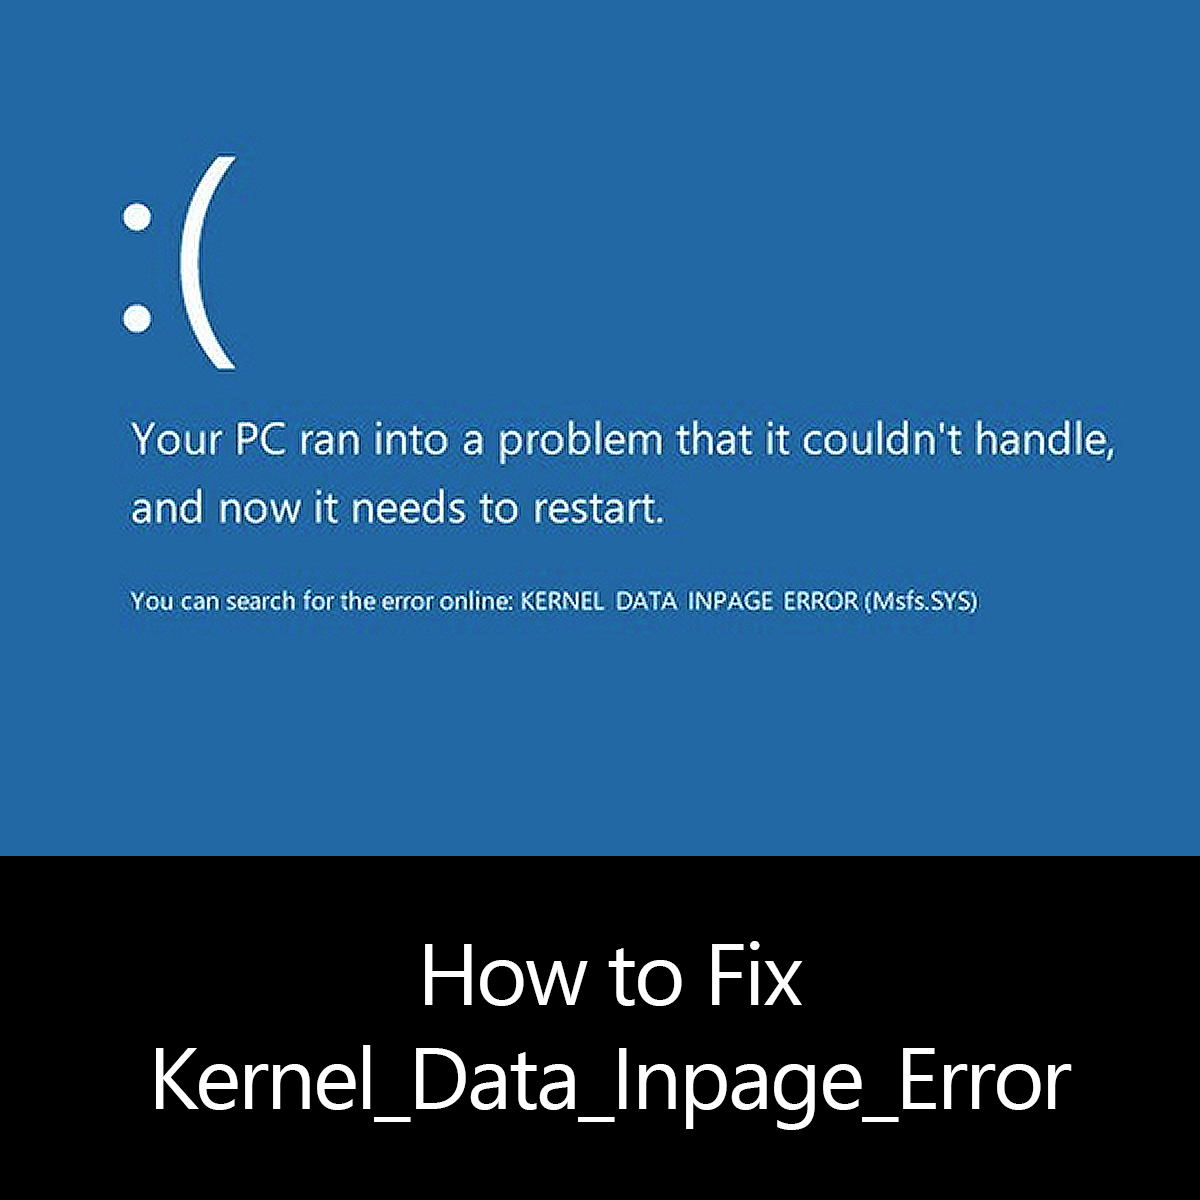 kernel_data_inpage_error windows 7